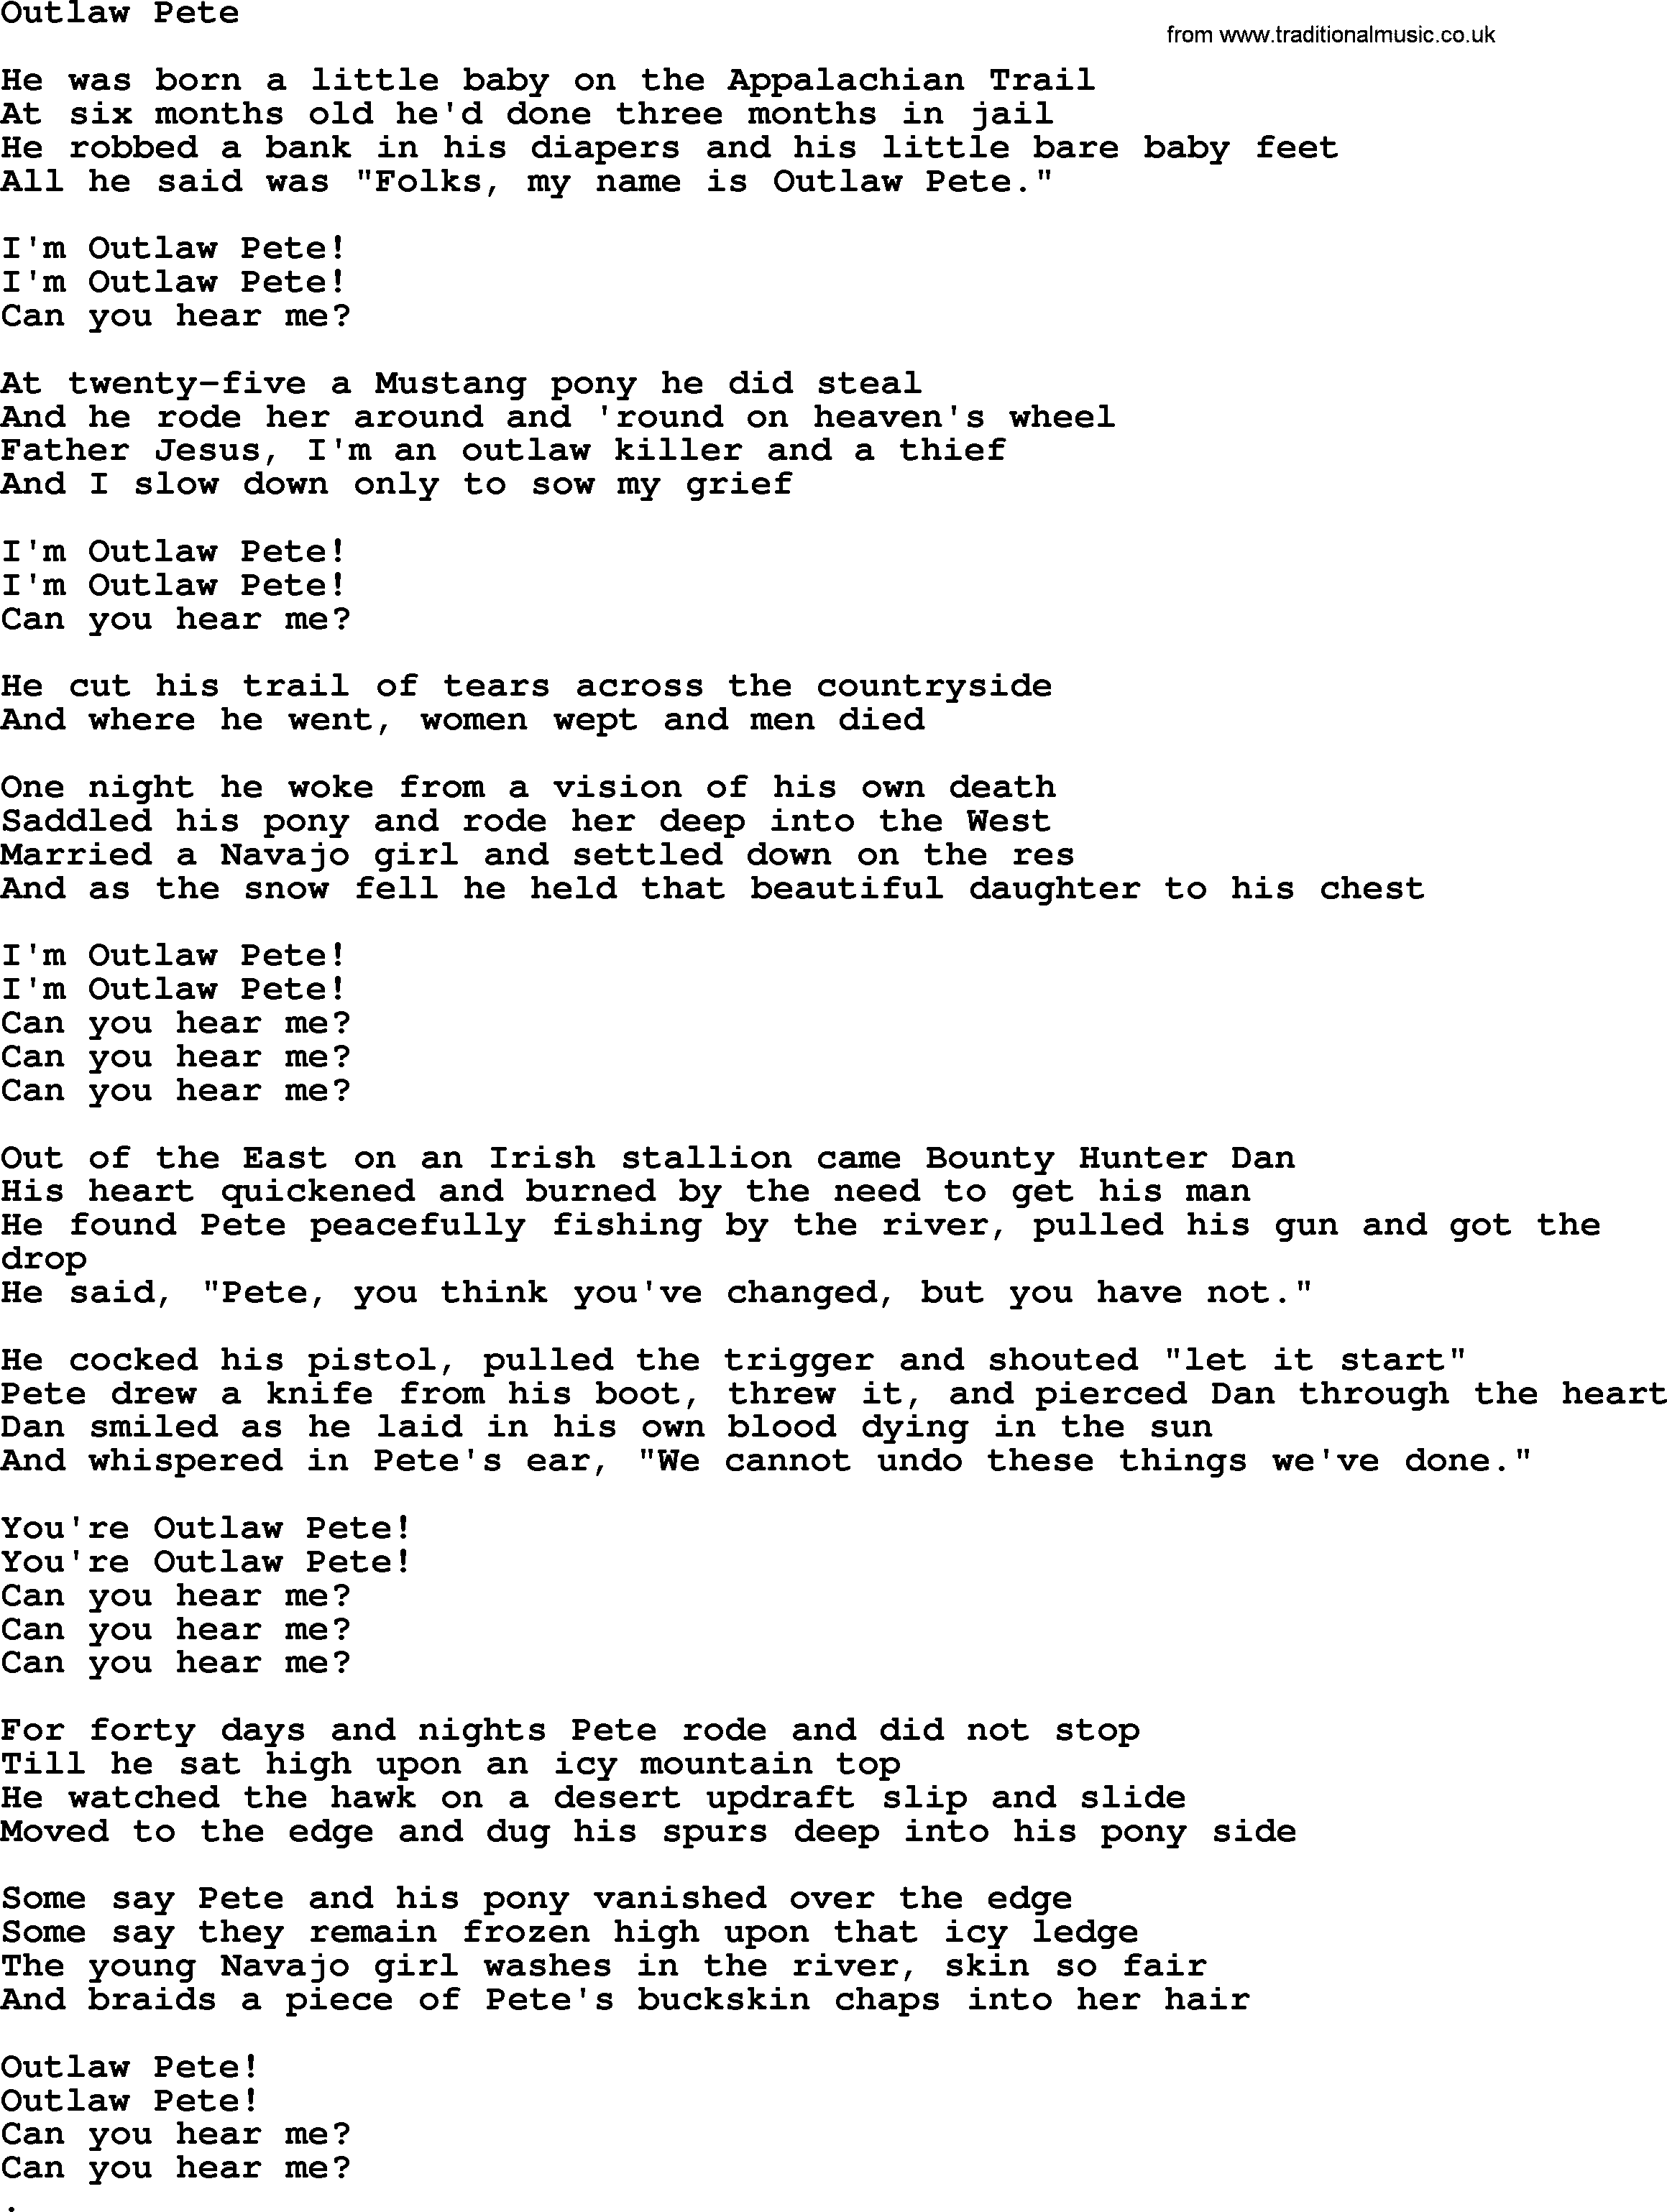 Bruce Springsteen song: Outlaw Pete lyrics